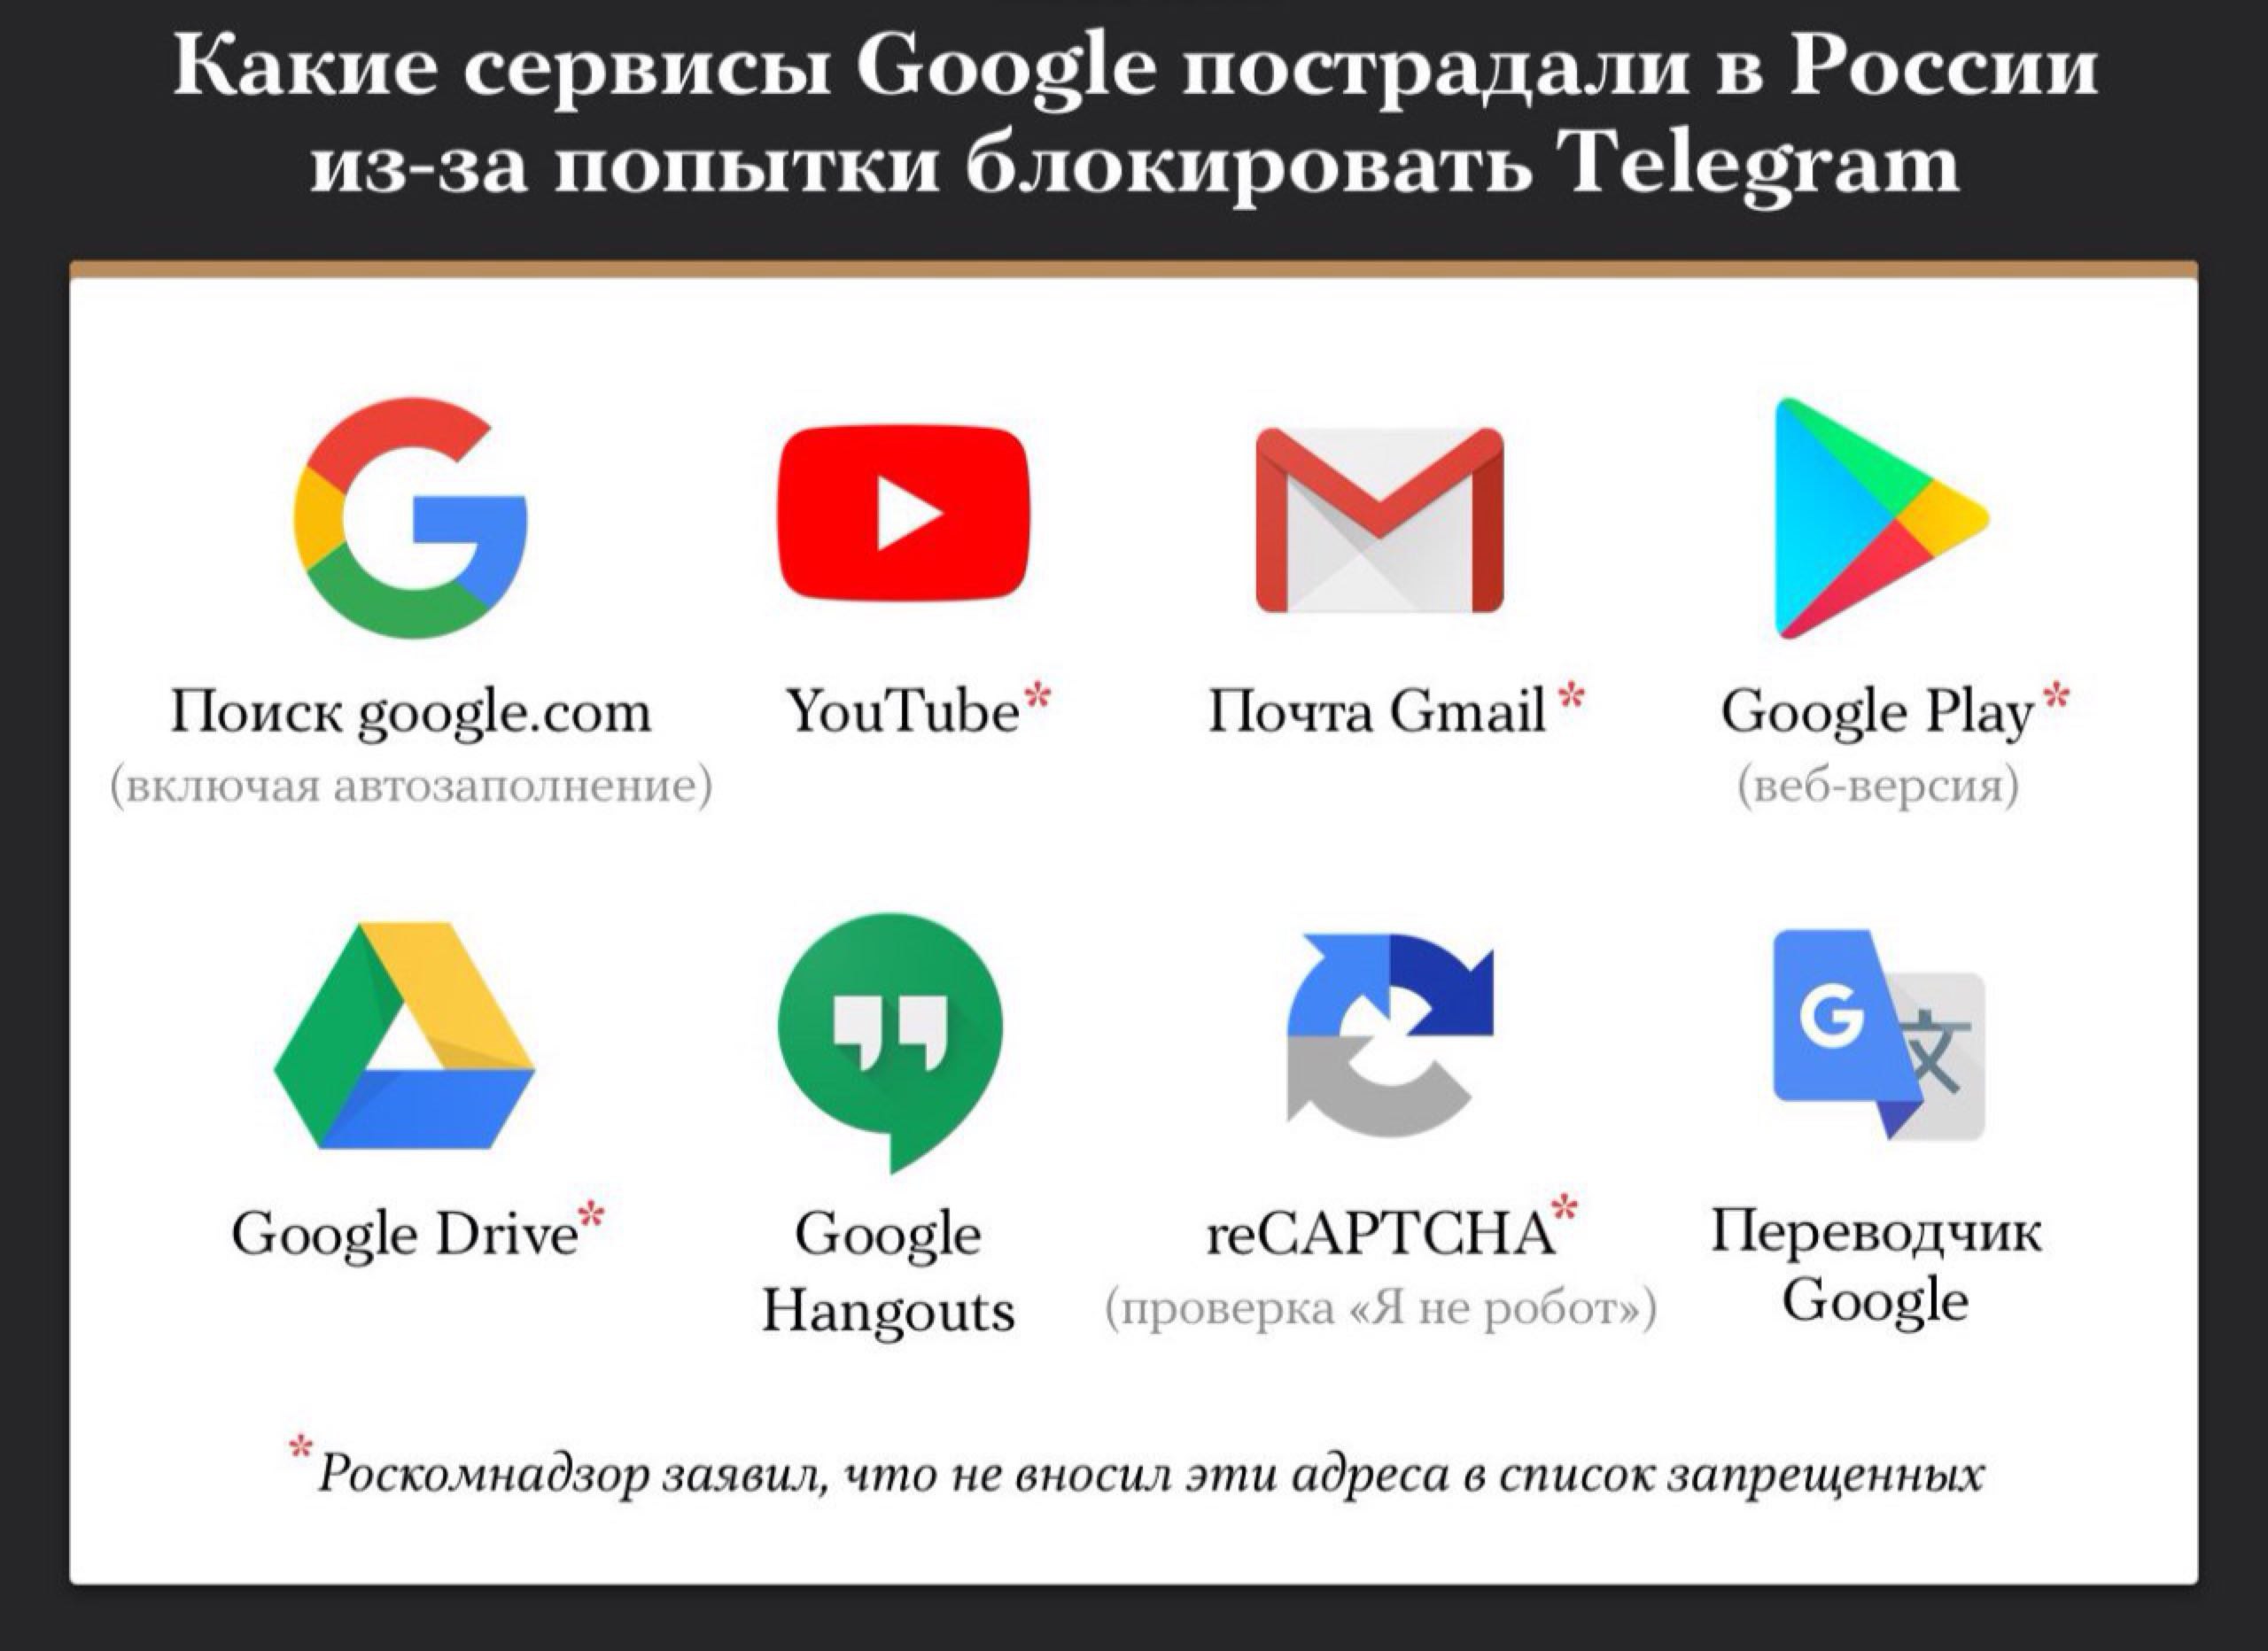 Google play system. Сервисы Google. Перечень сервисов гугл. Интернет сервисы гугл. Продукты гугл.